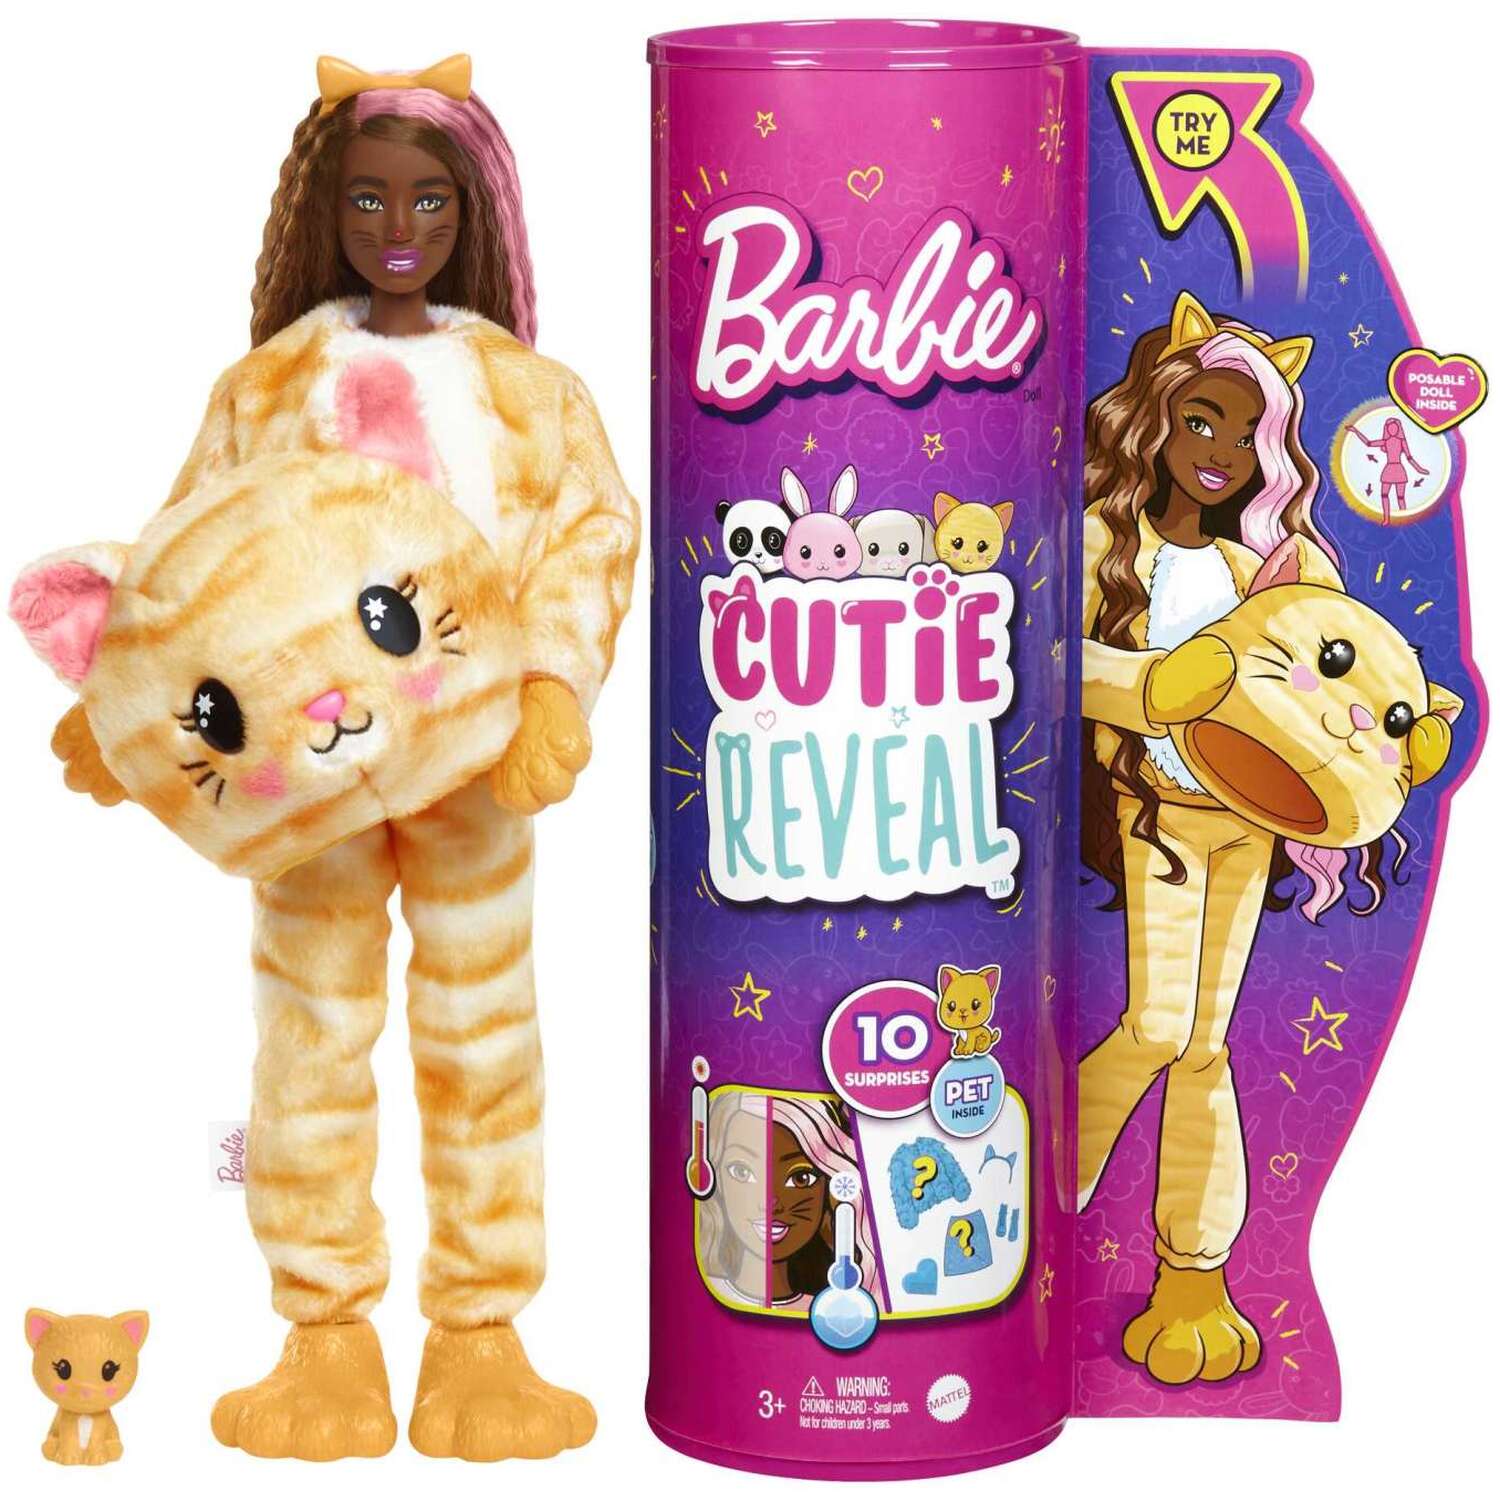 Barbie Cutie Reveal Cat Costume Doll - Pink Image 2